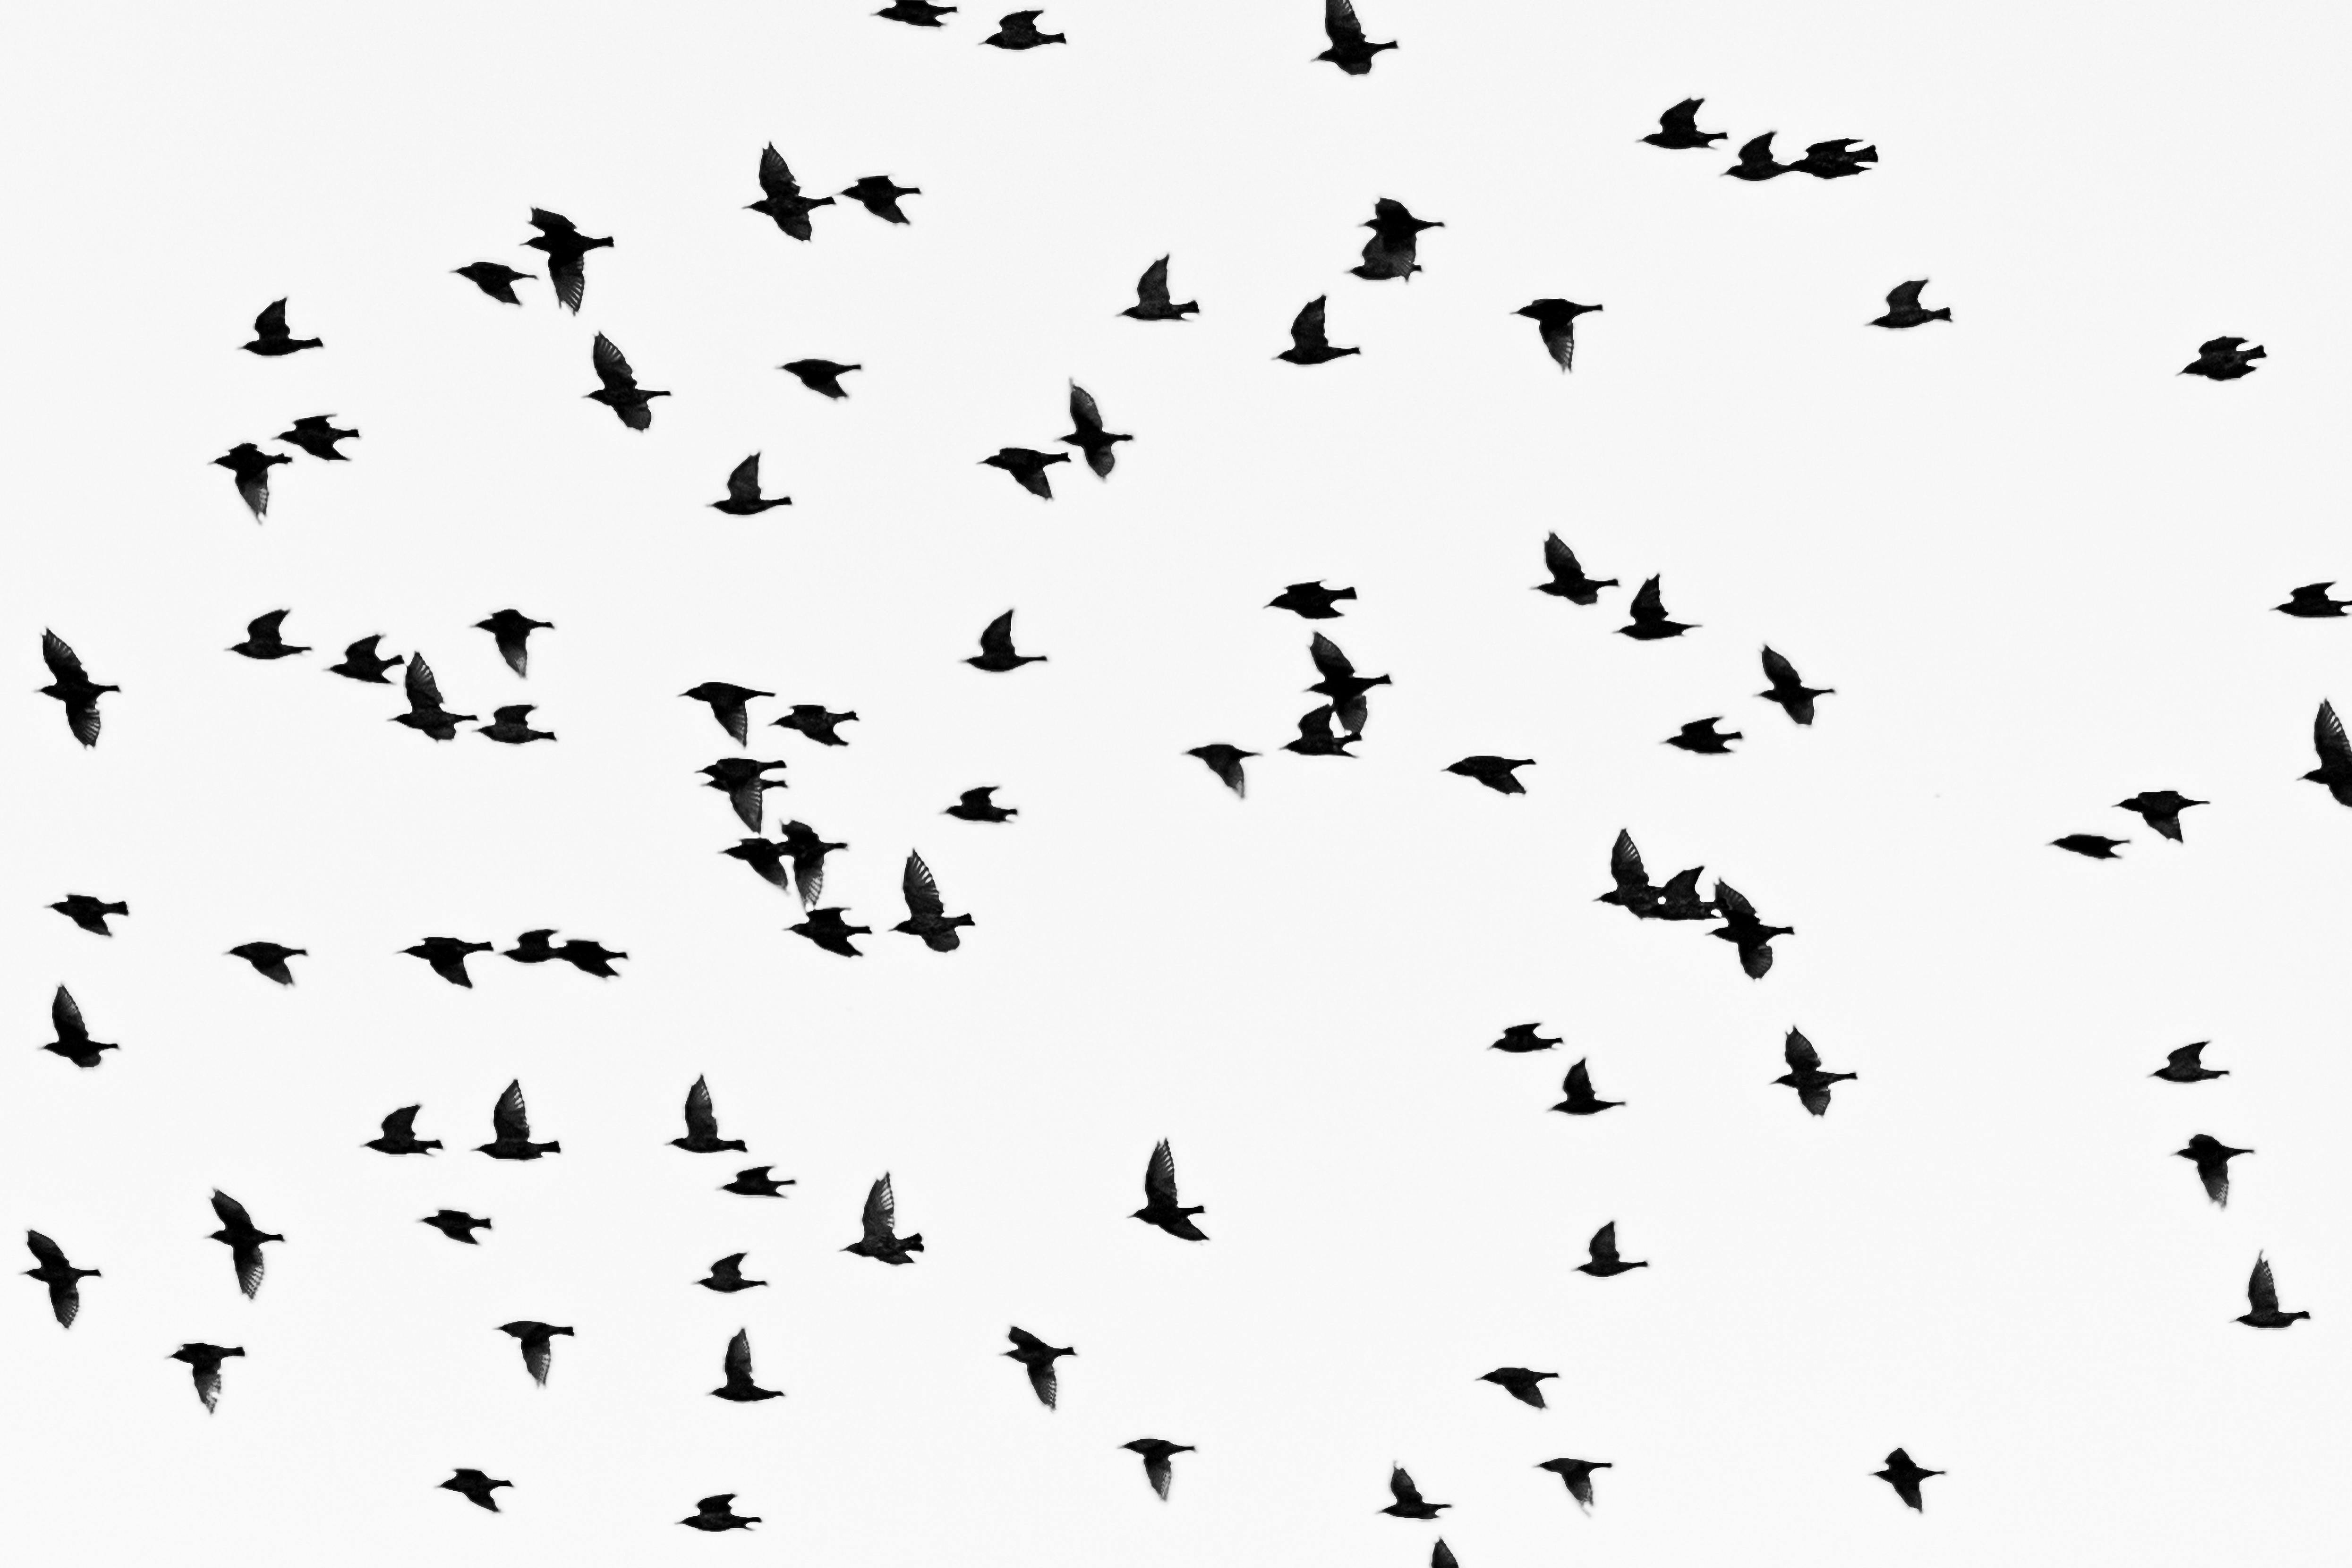  Gambar  Burung  Terbang  Hitam  Putih  Gambar  Burung 